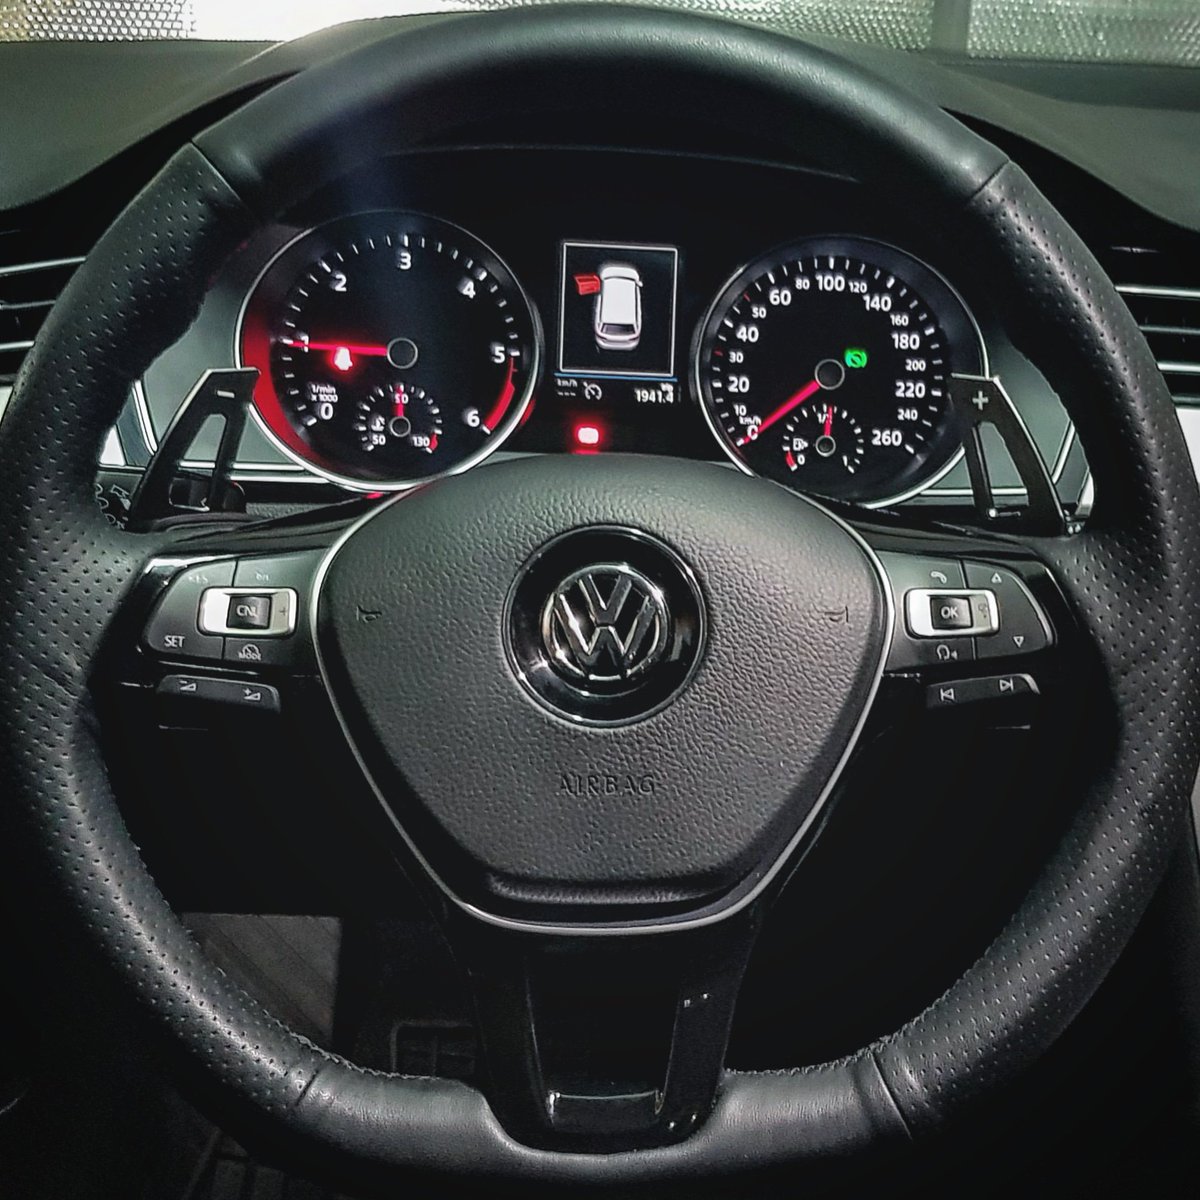 Levas nuevas para la fiera
#Volkswagen #passat #passatvariant #dsg #levas